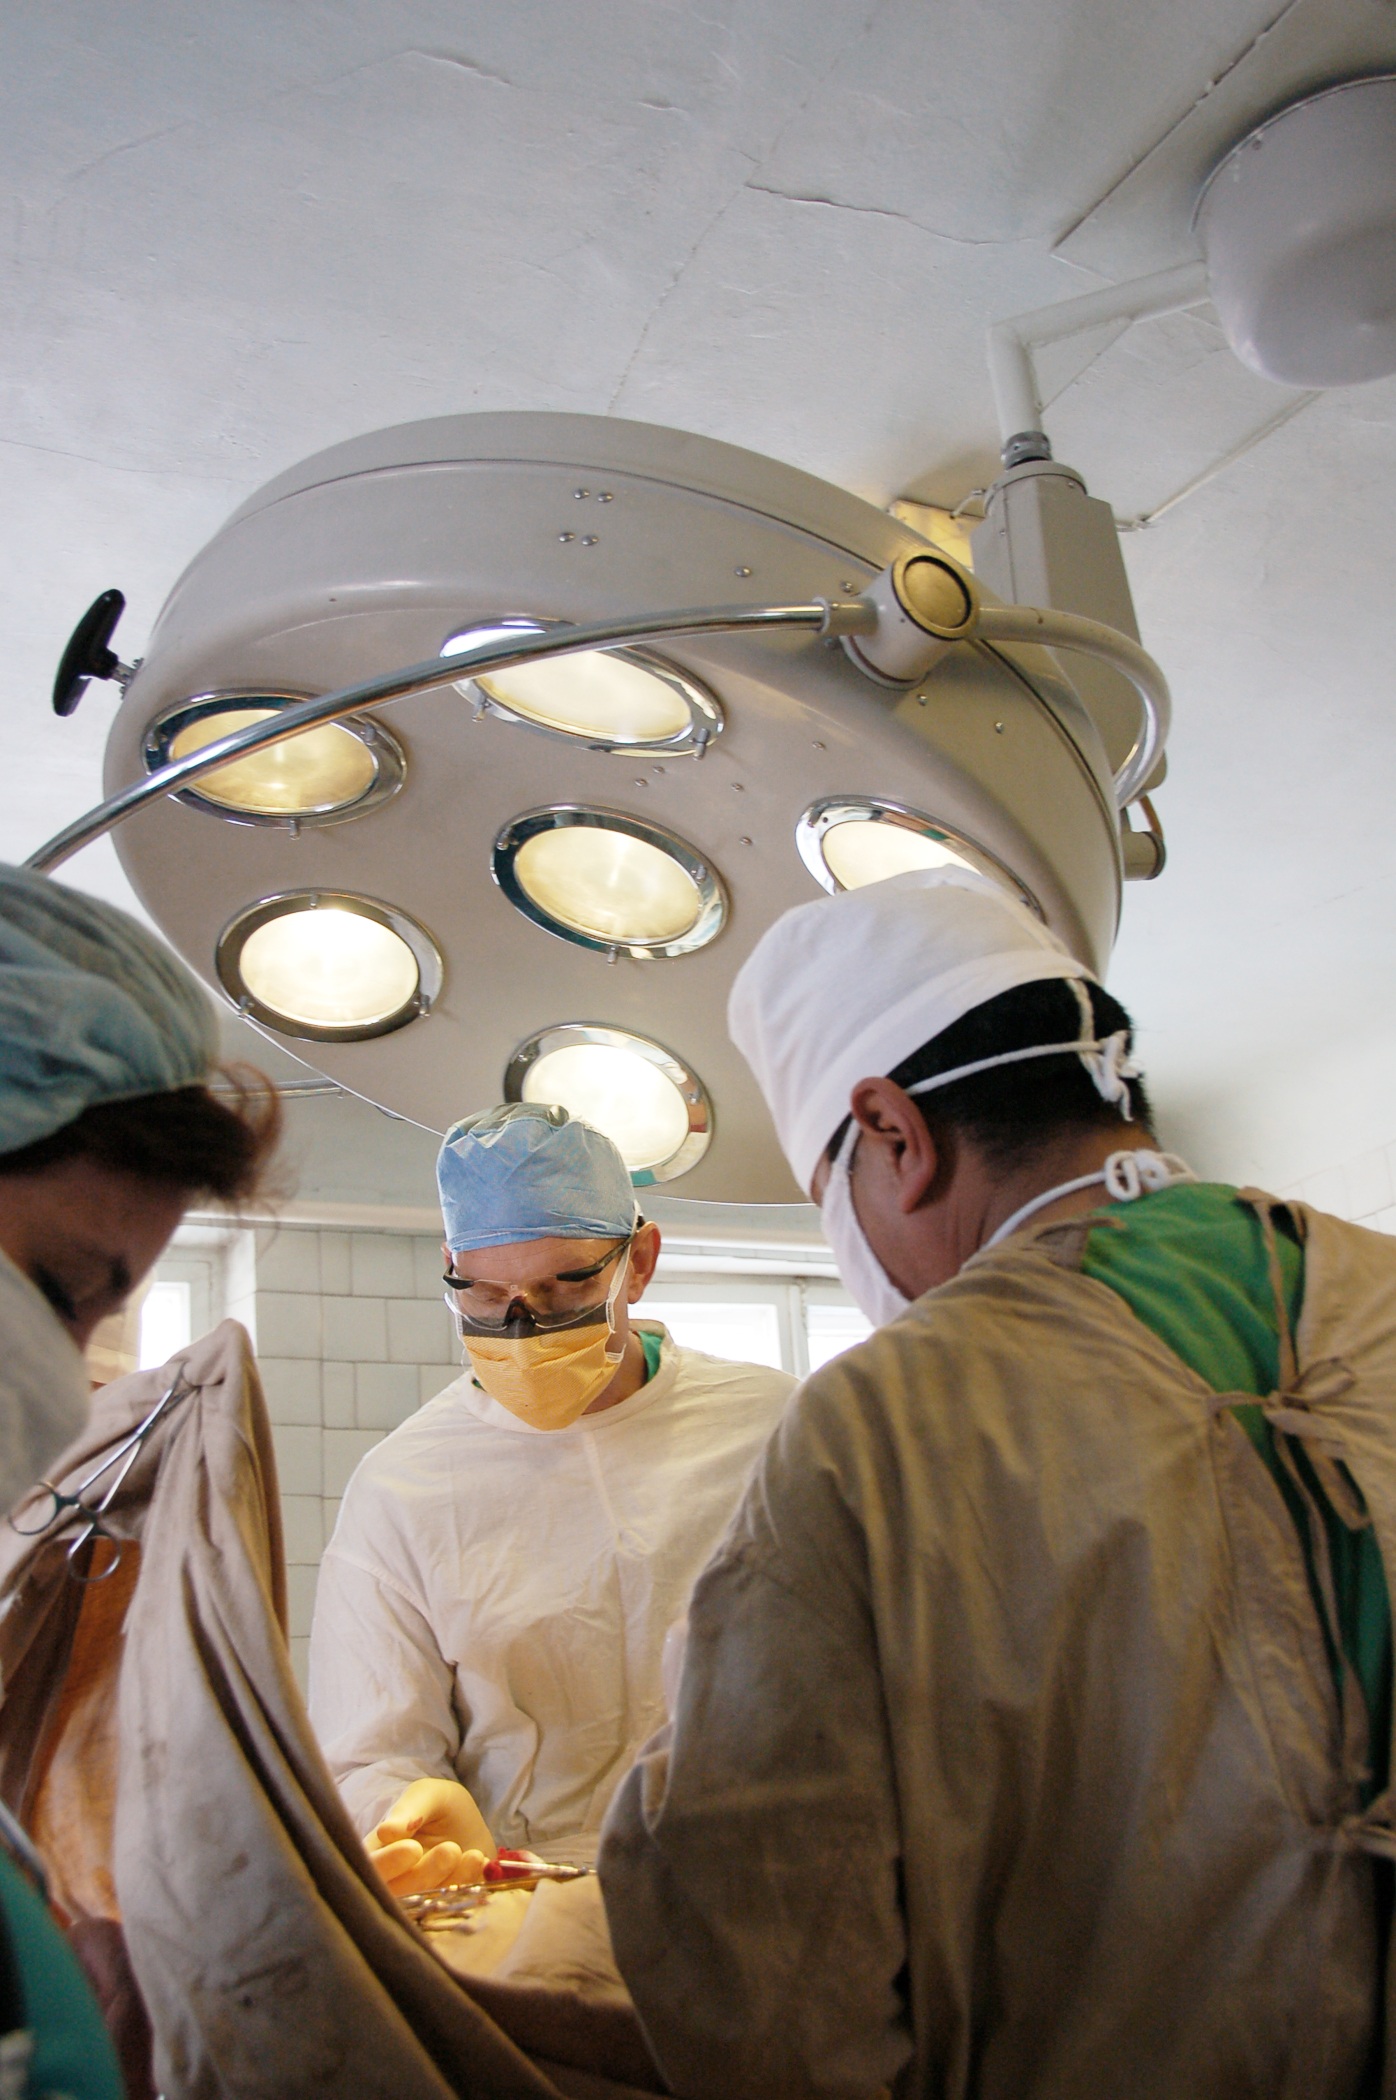 Group of surgeons operating photo